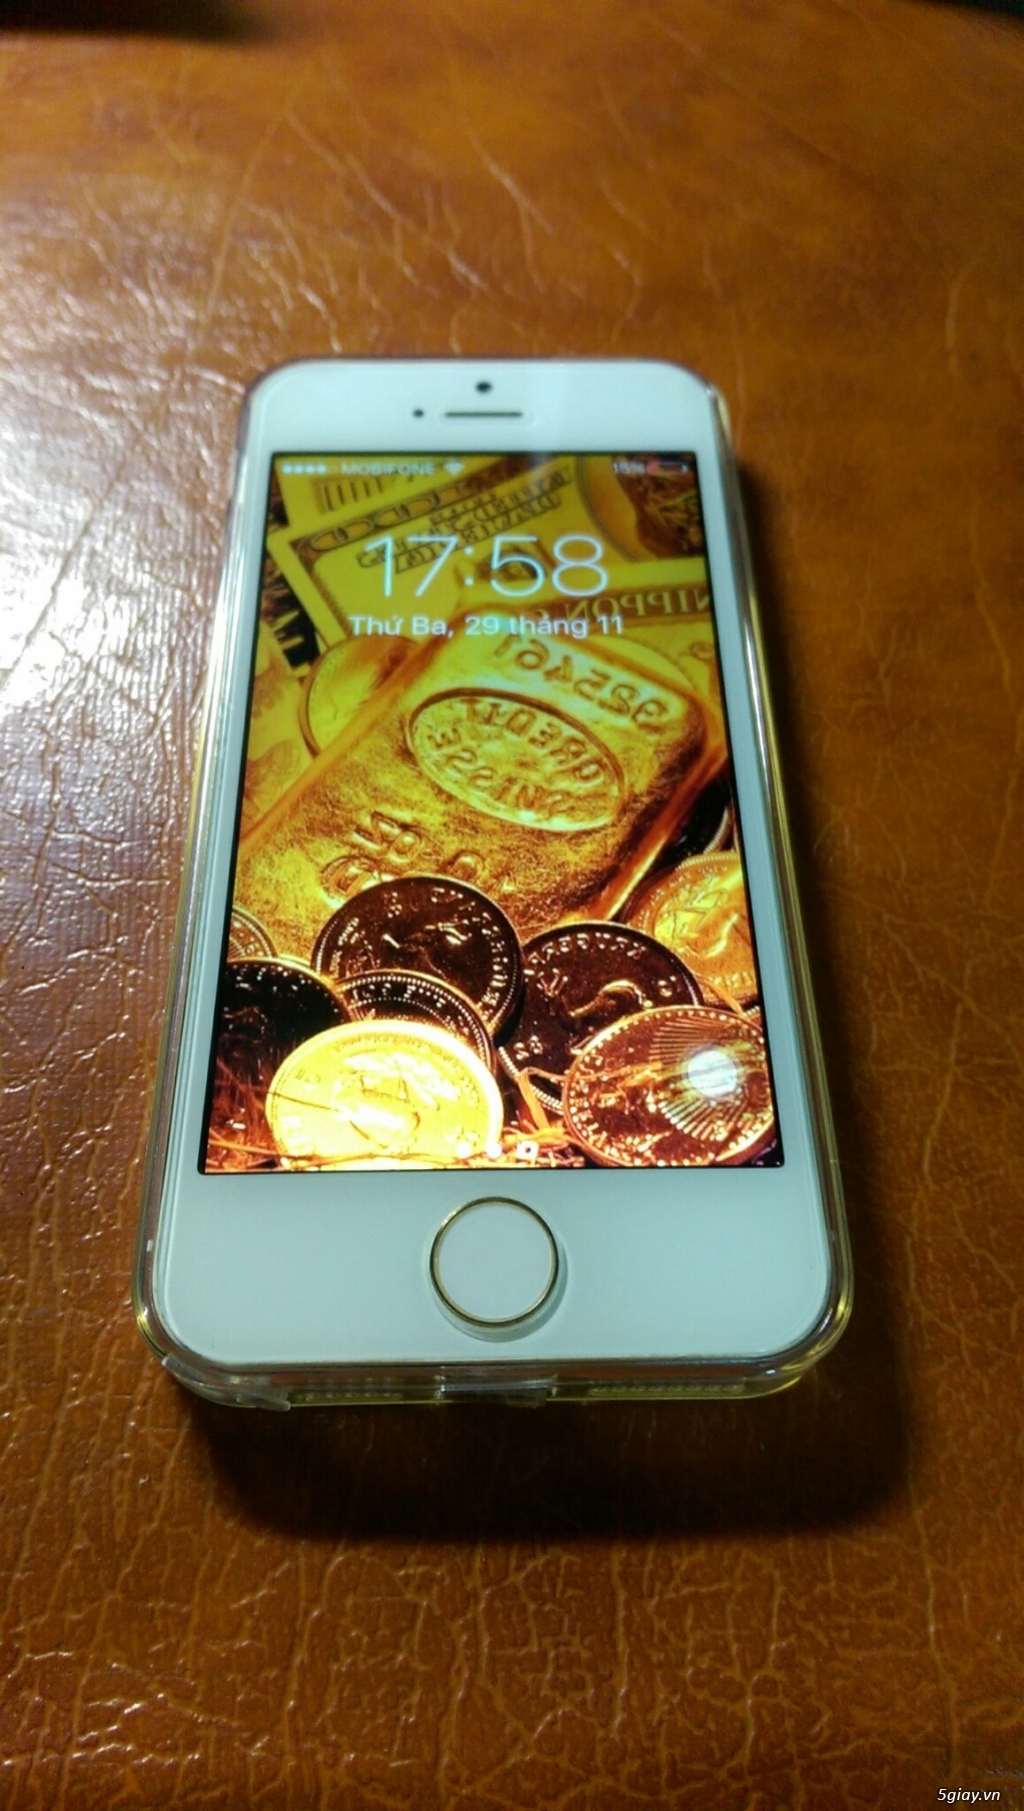 iphone 7 plus superfake 128g gold,xác sống 5s,iphone 5 lock độ vỏ se.. - 6